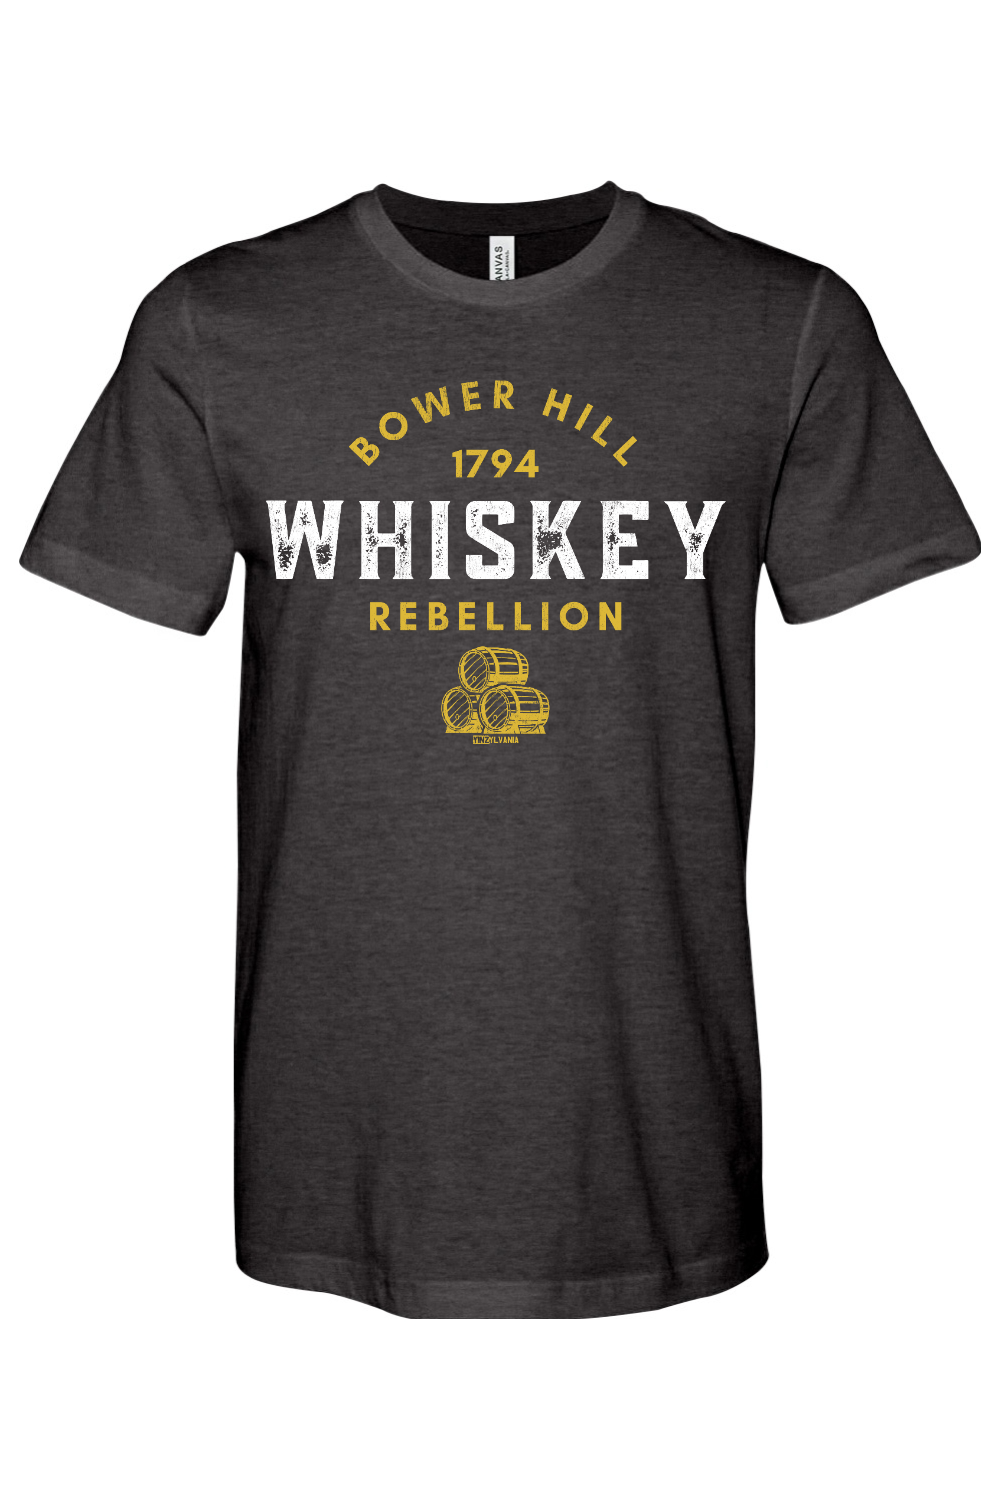 Whiskey Rebellion - Bella + Canvas Jersey Tee - Yinzylvania